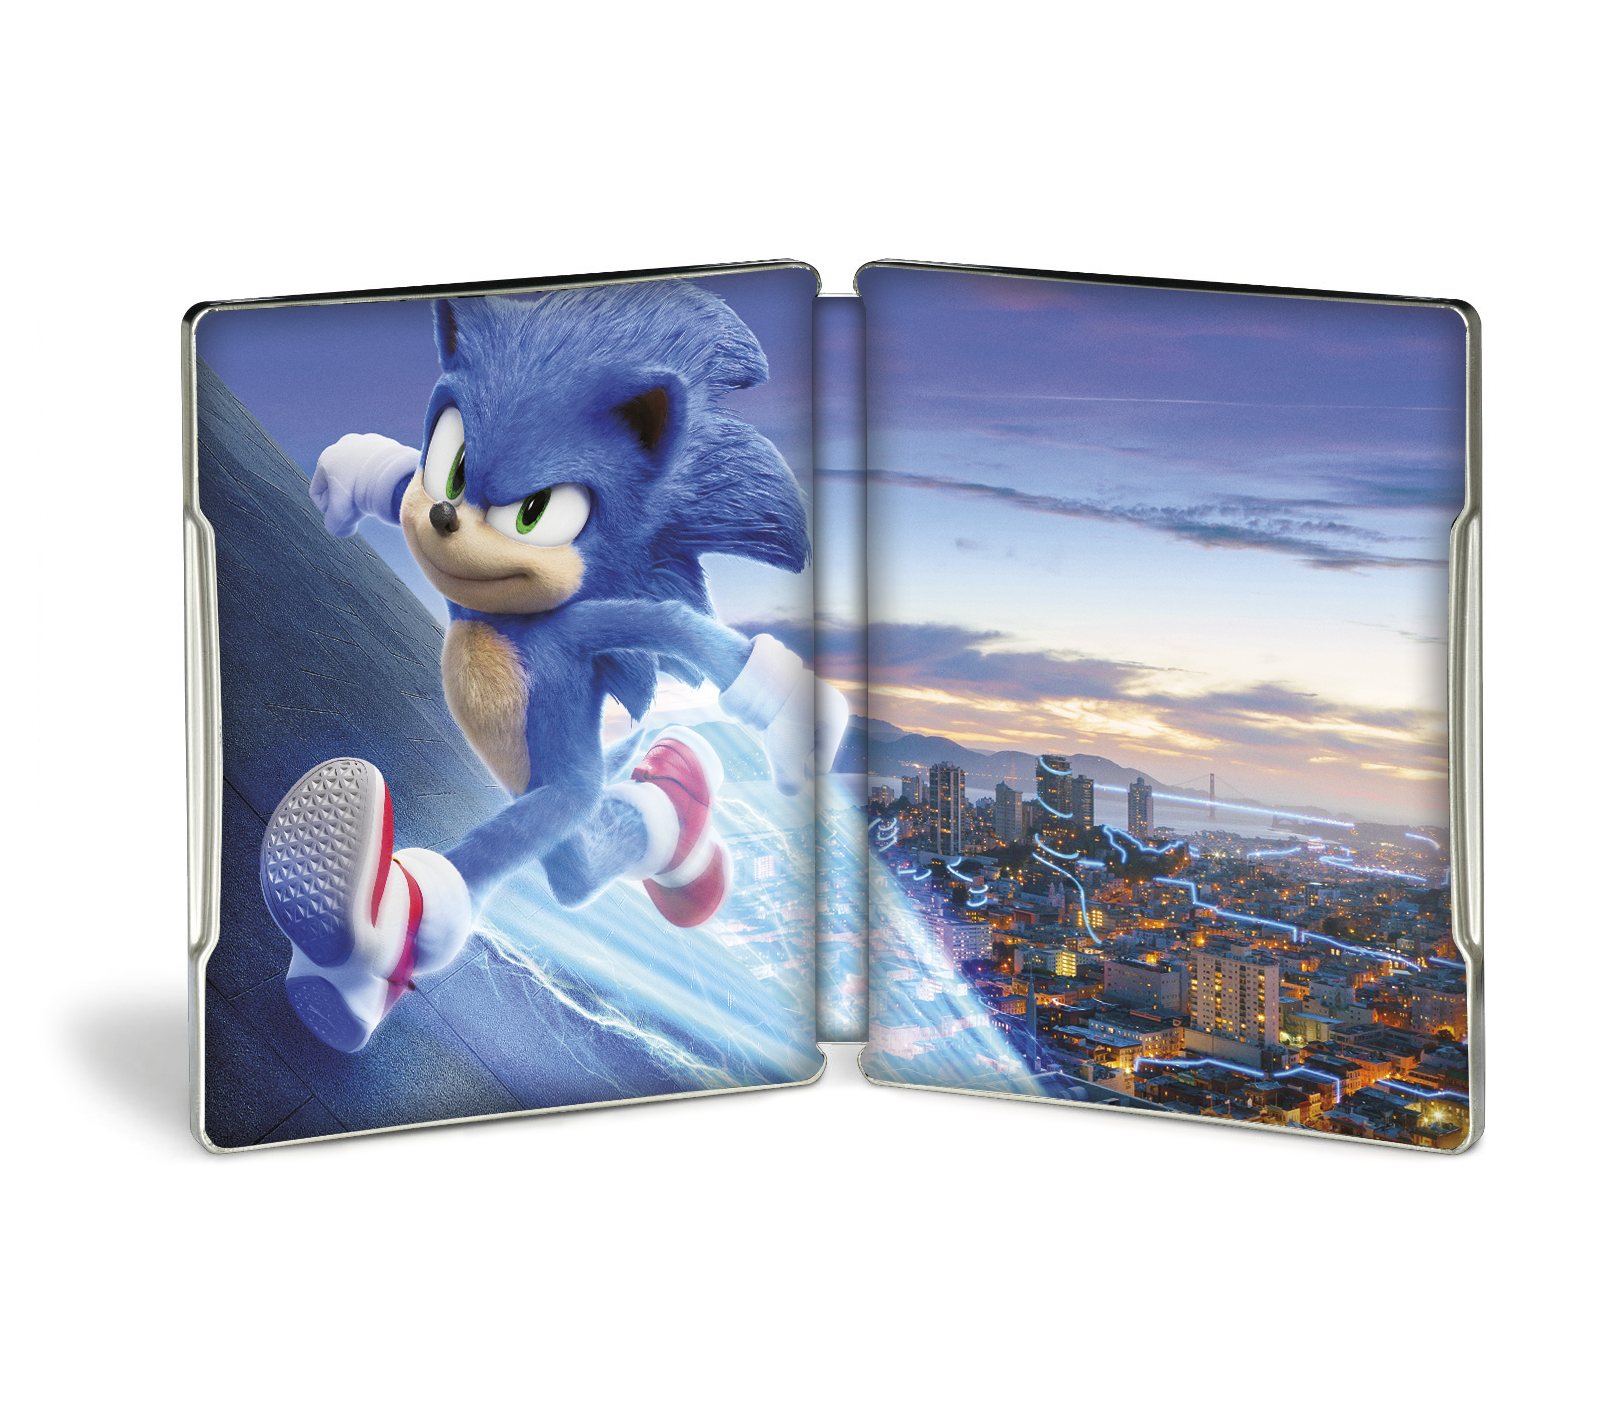 Sonic The Hedgehog 4k And Blu Ray Steelbooks [korea